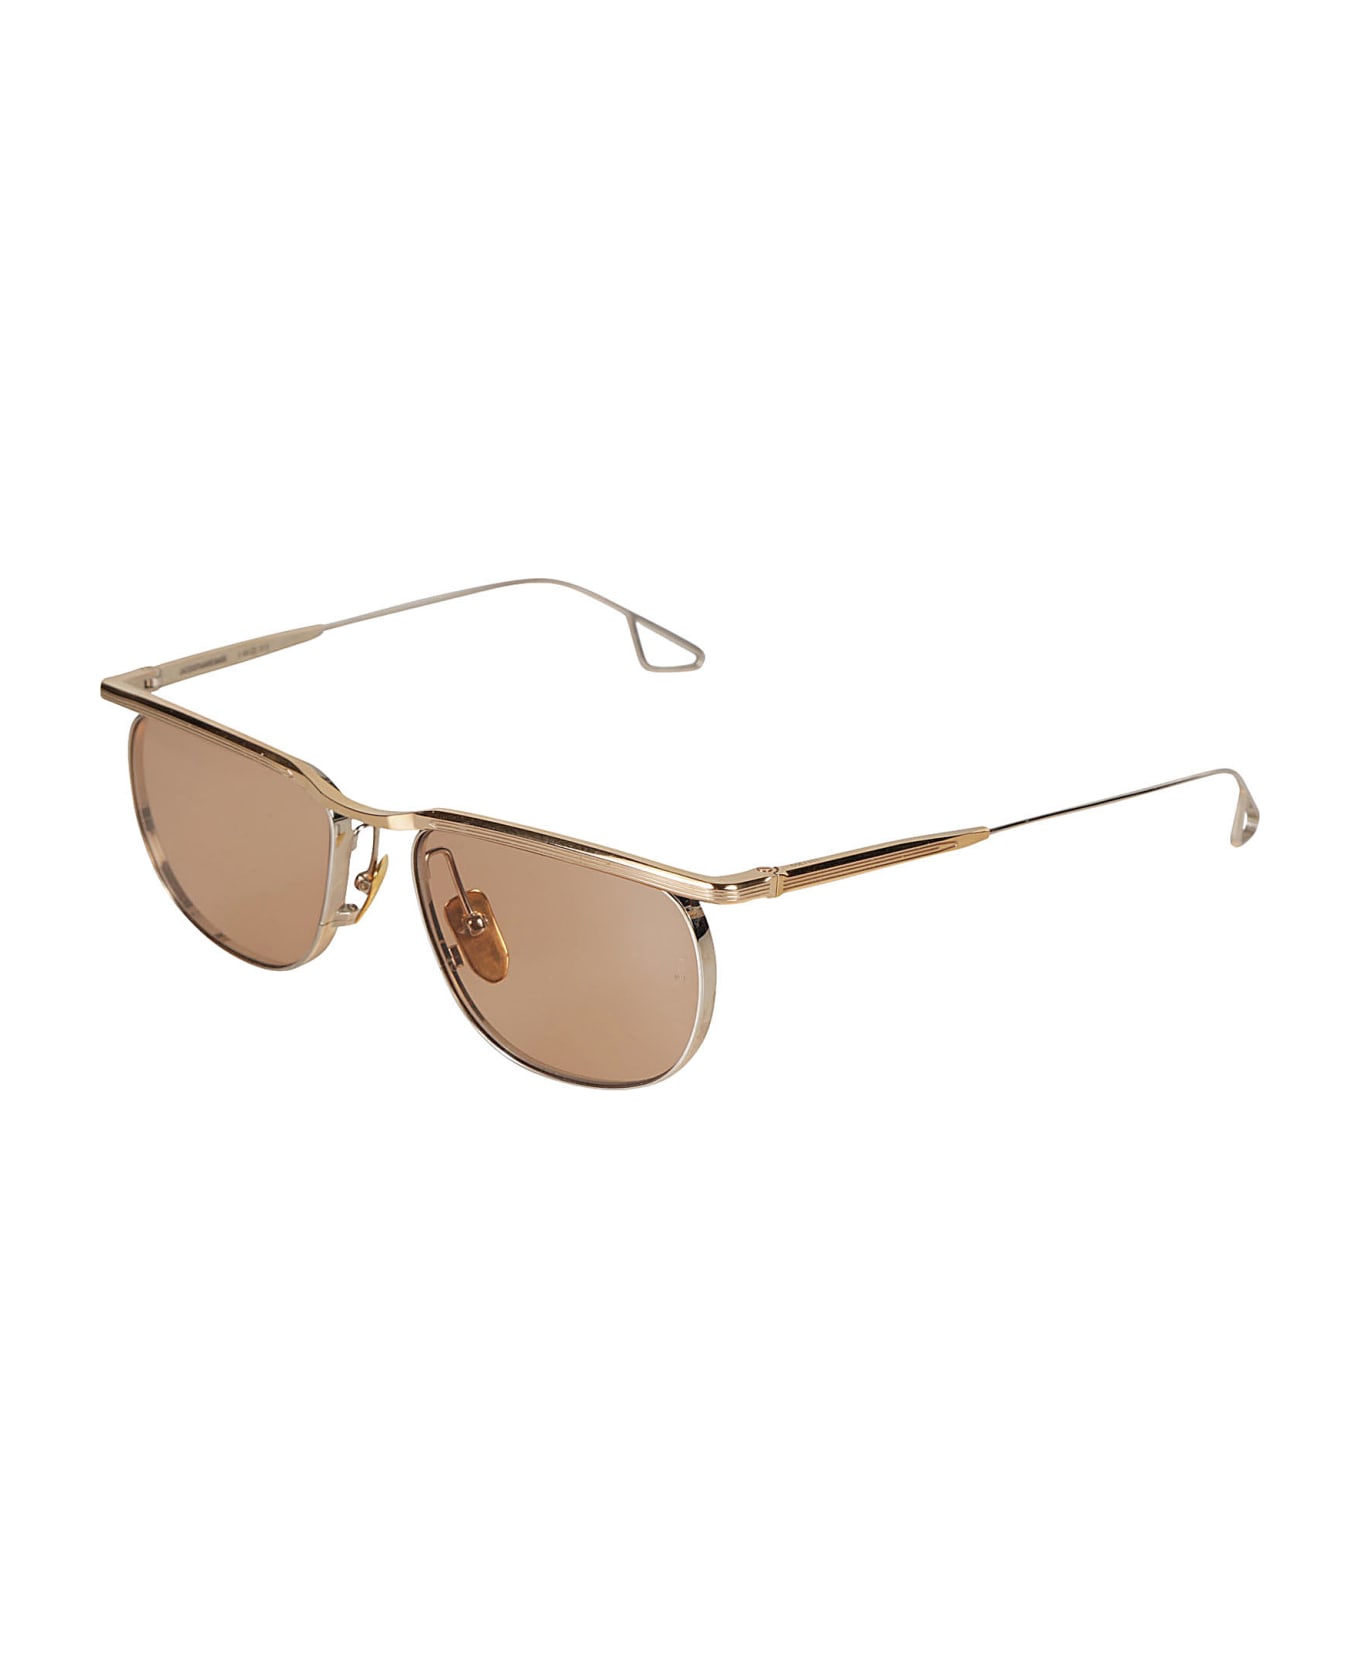 Jacques Marie Mage Seberg Sunglasses Sunglasses - Gold